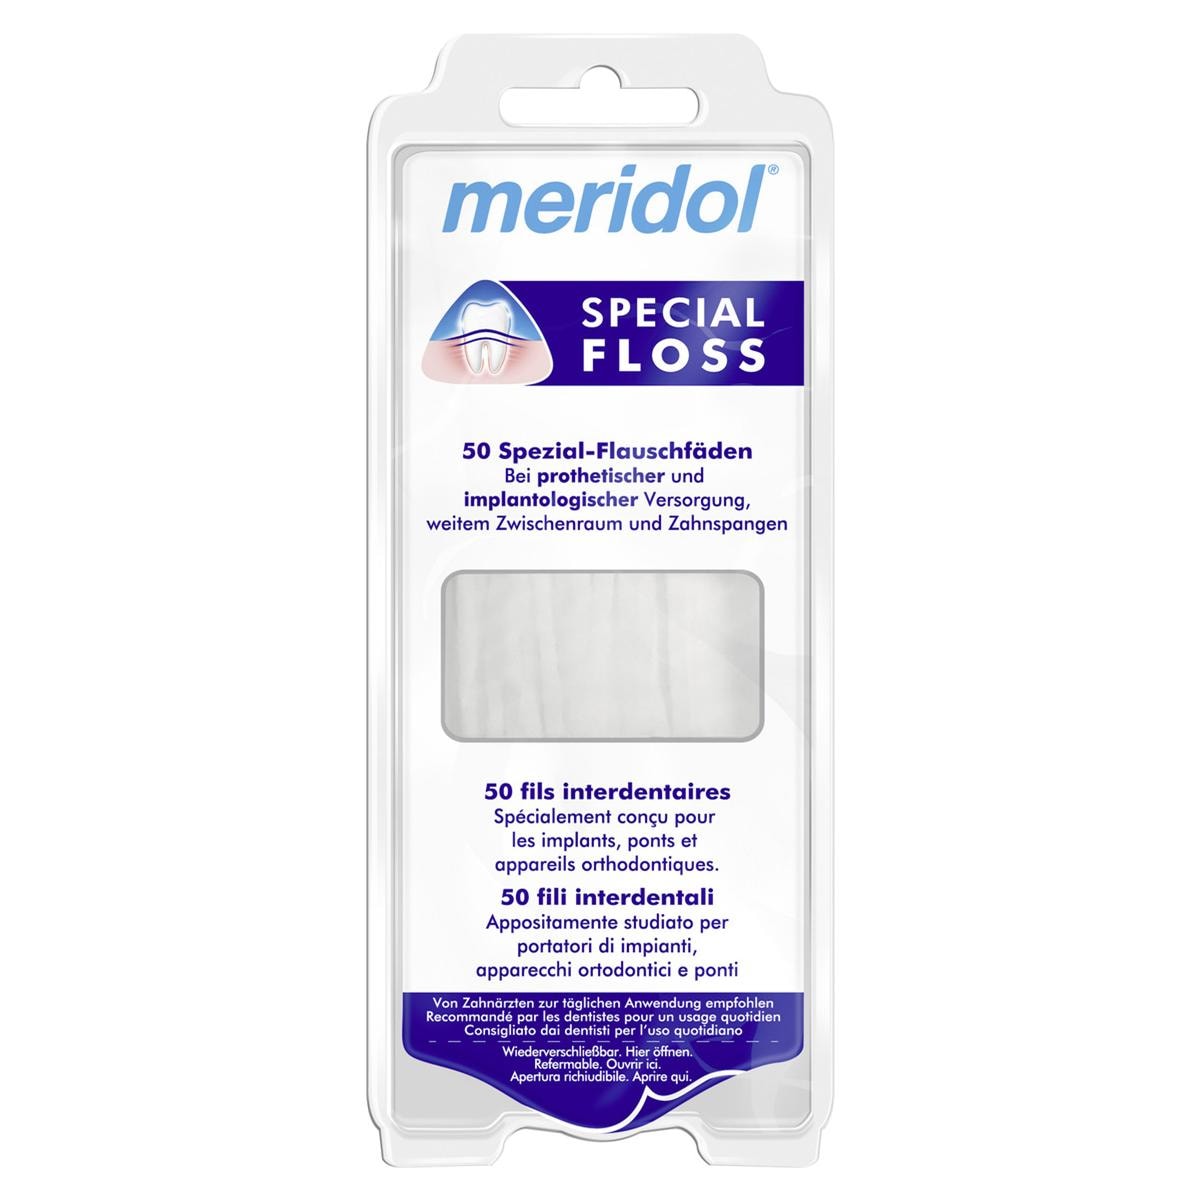 Meridol special floss - Verpakking, 50 draden